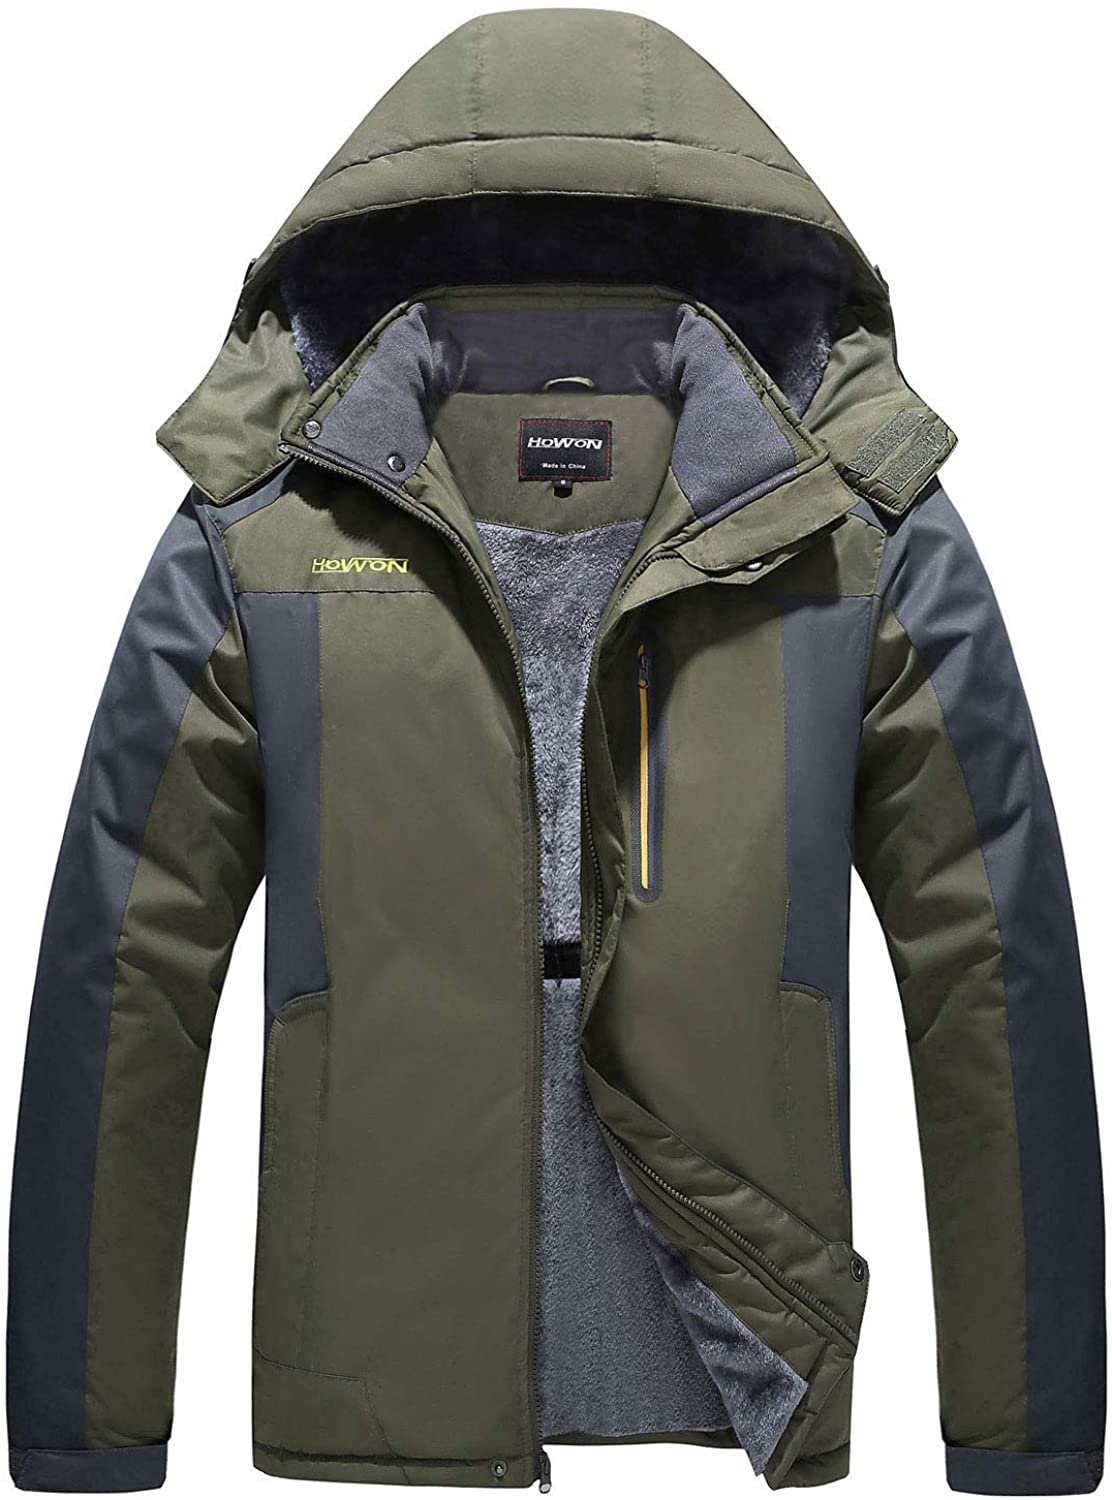 HOW'ON Men's Waterproof Ski Jacket Windproof Rain Jacket Winter Warm Hooded  Coat